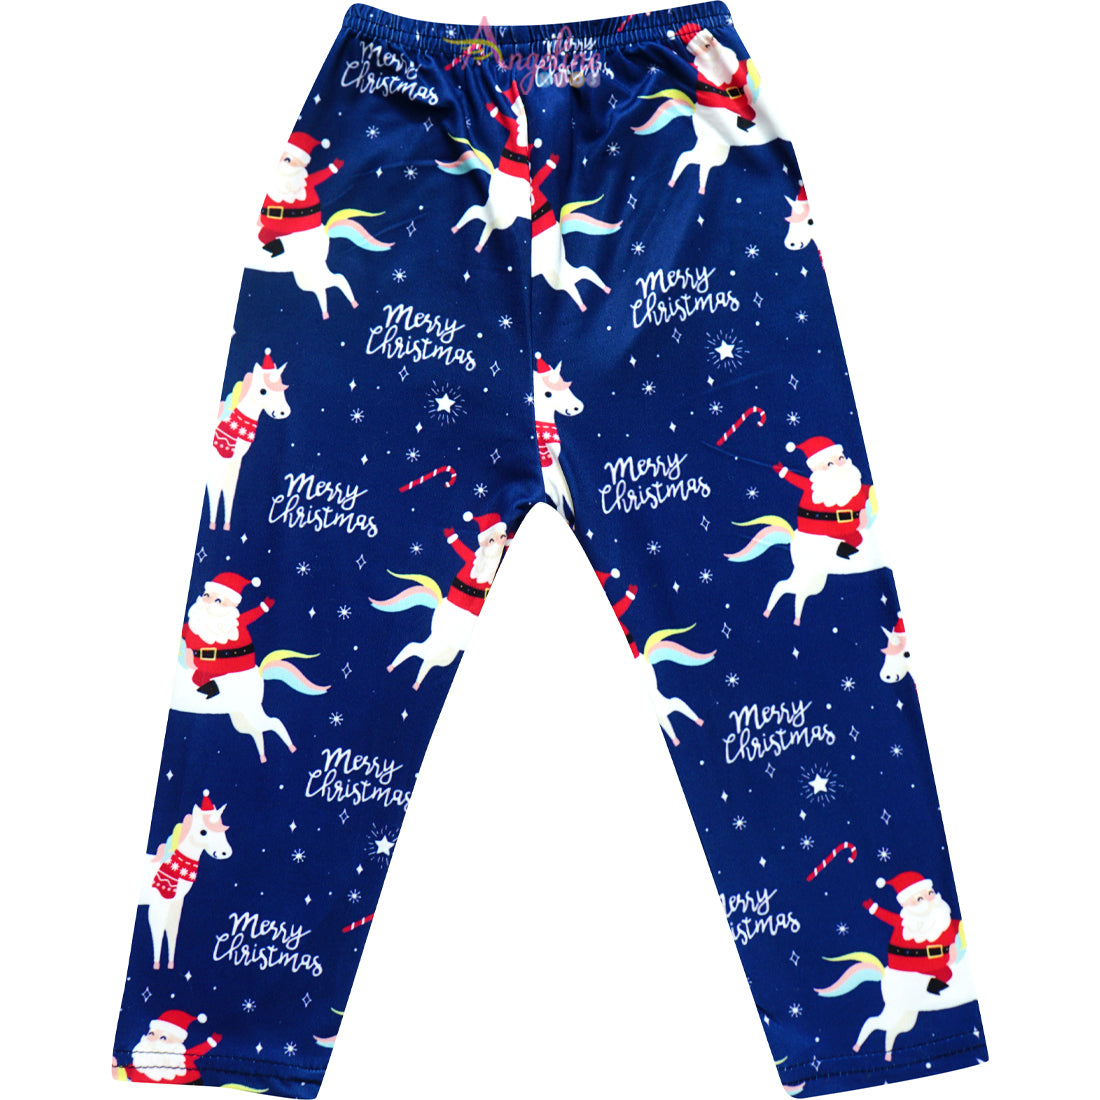 Girls Christmas Santa Unicorn Scarf Outfit Set - Red/Navy - Angeline Kids